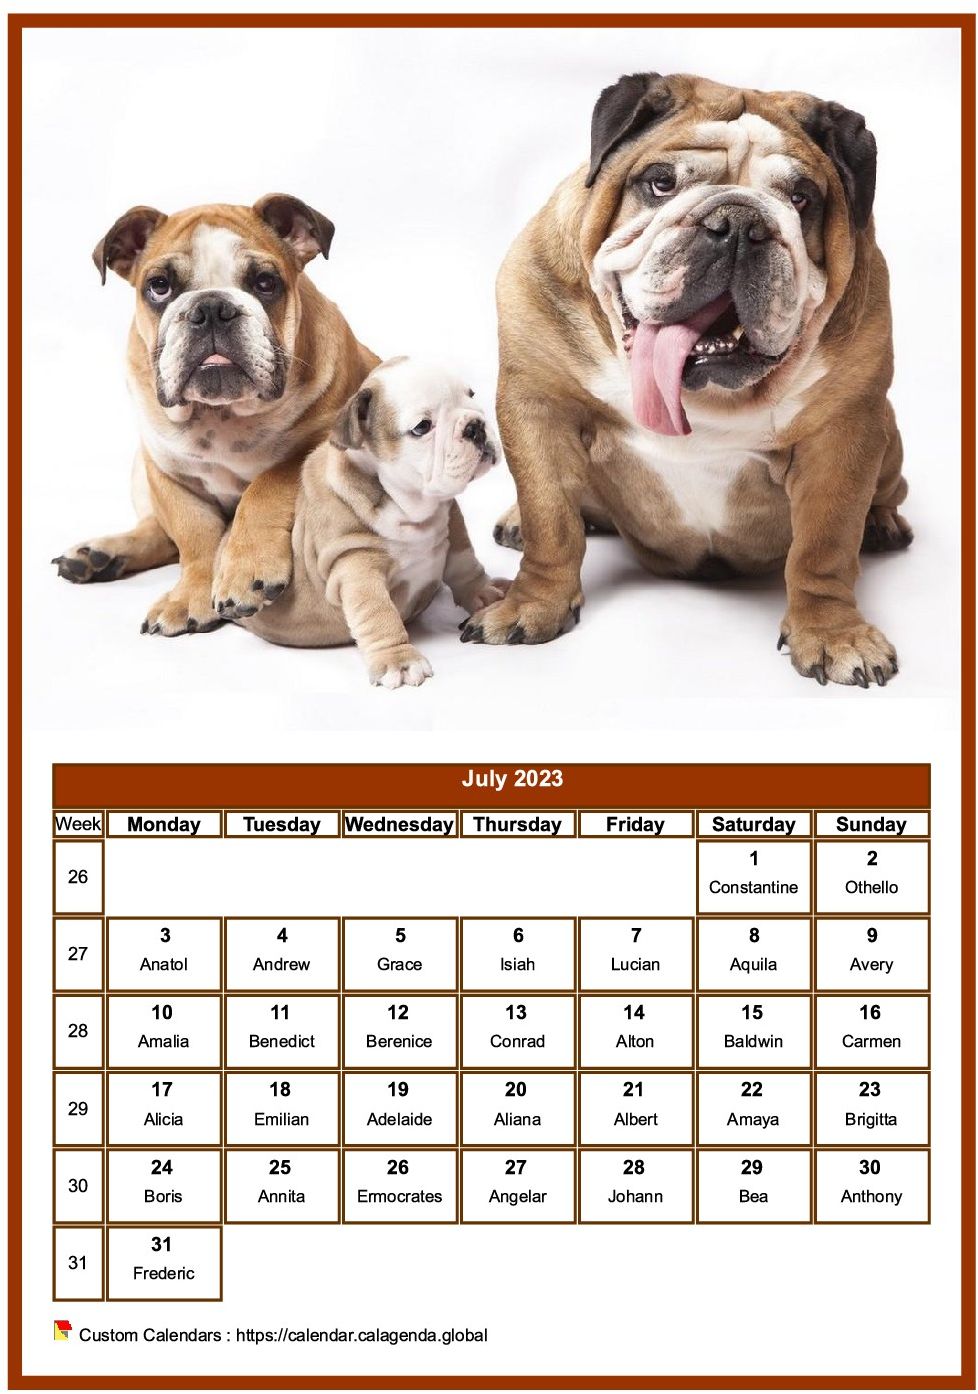 Calendar July 2023 dogs